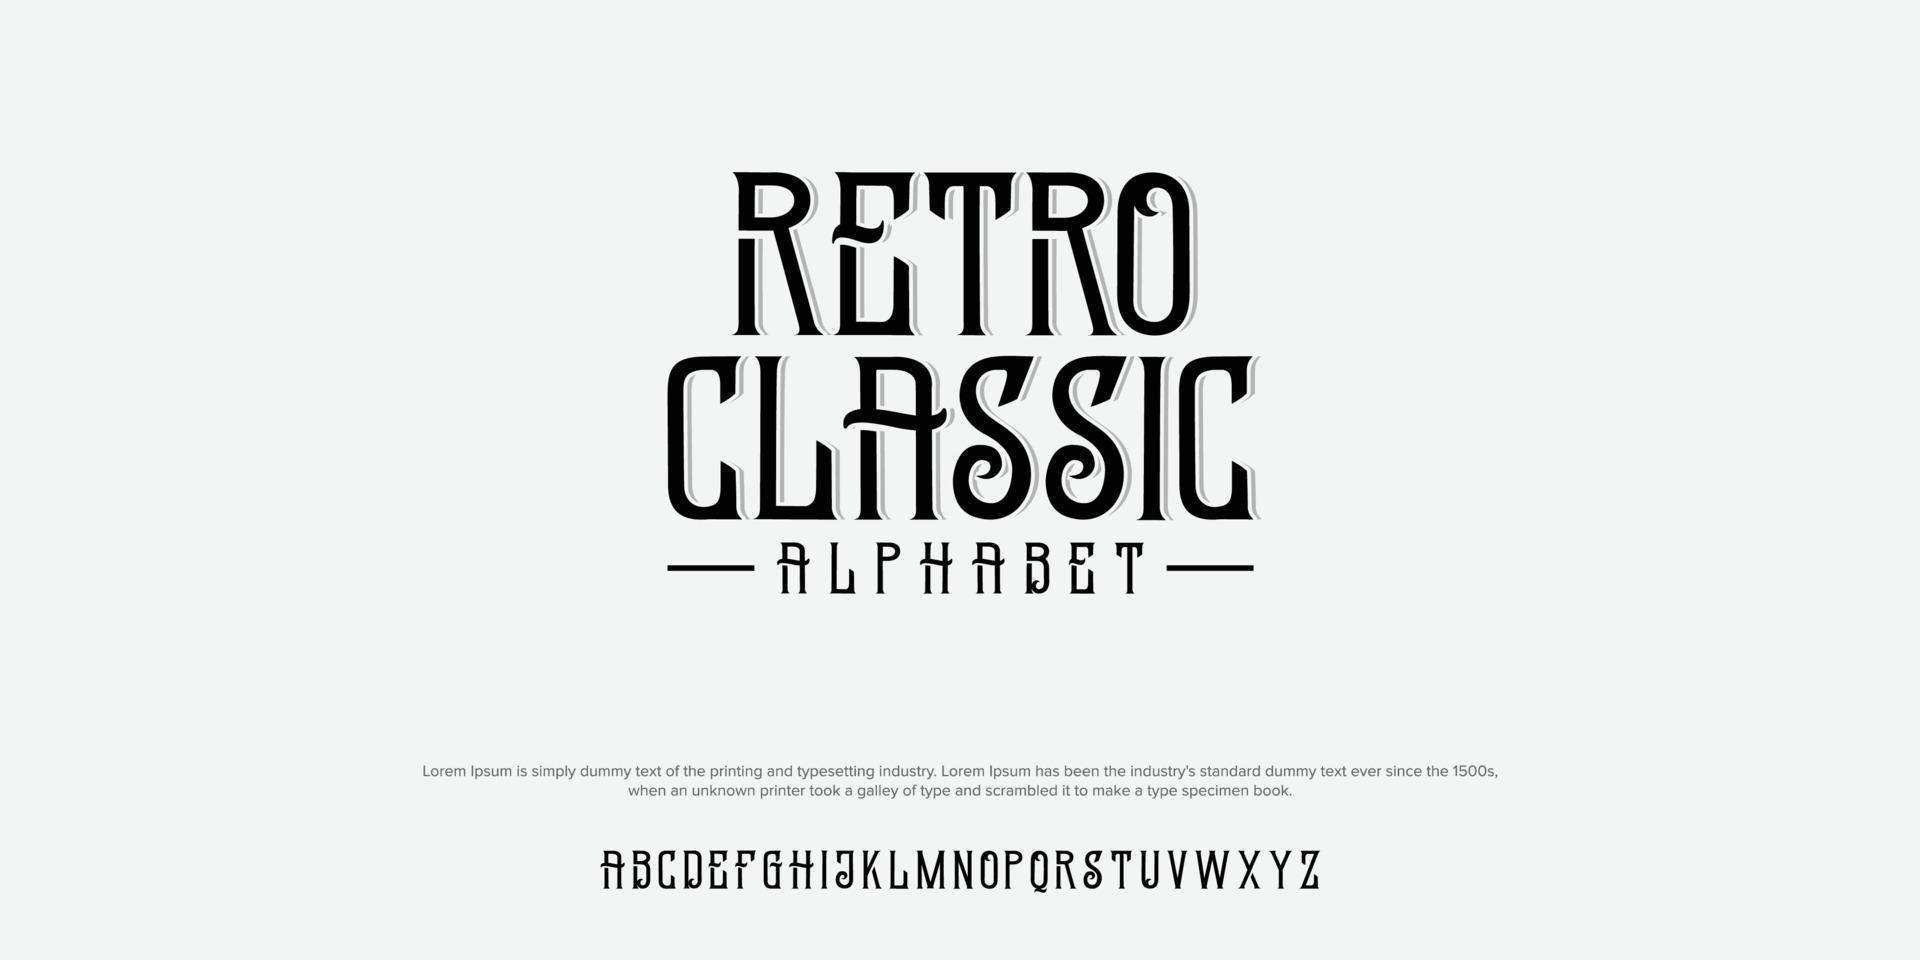 Retro-klassische Vintage-Retro-Klassiker-Schriftsatz-Vektorillustration vektor